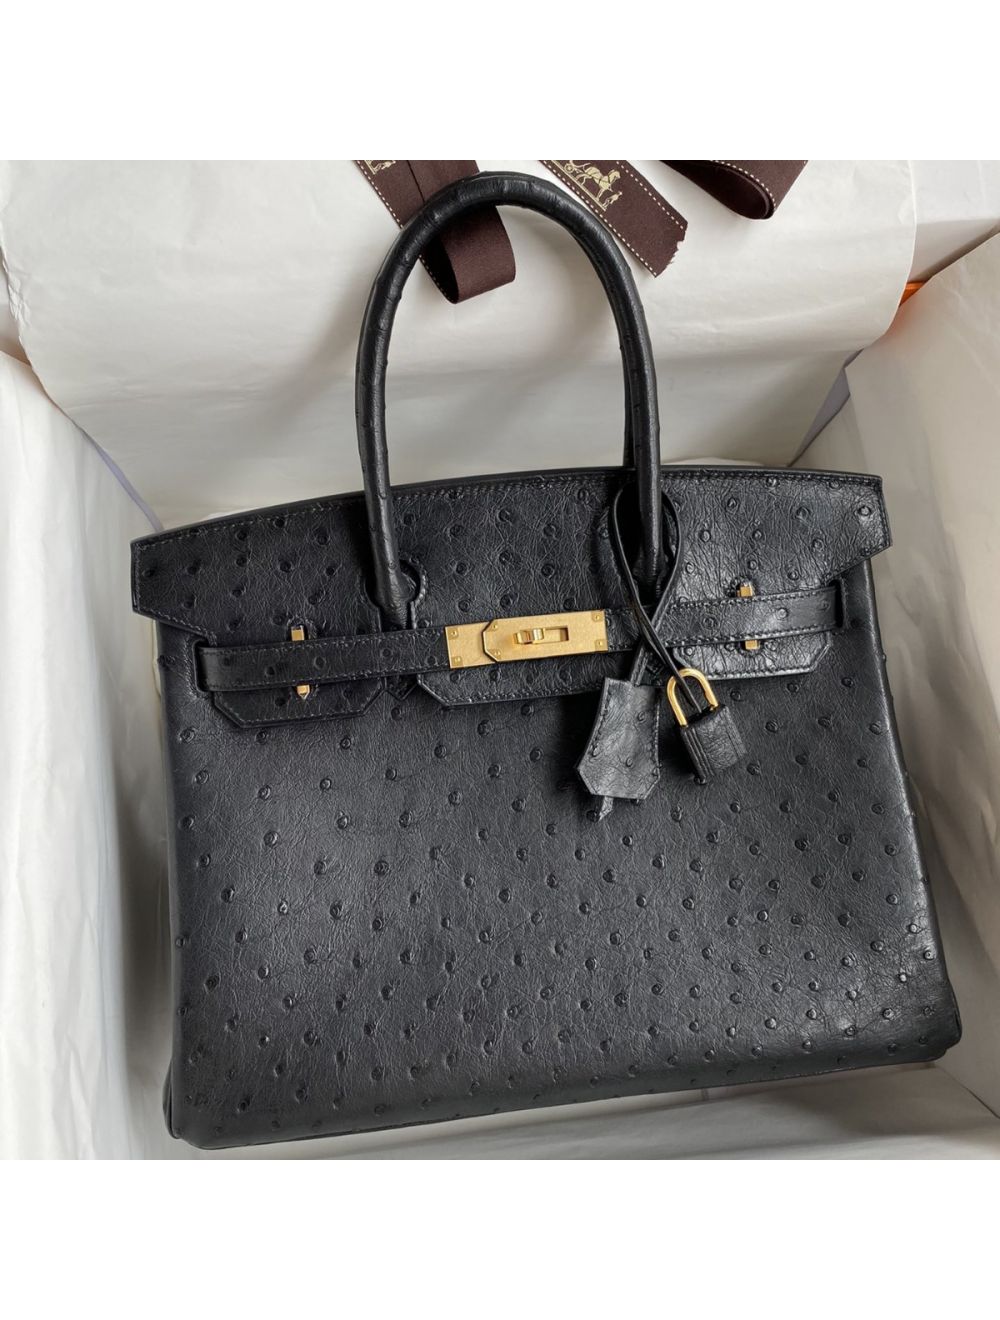 Replica Hermes Birkin 30 Retourne Handmade Bag In Black Ostrich Leather